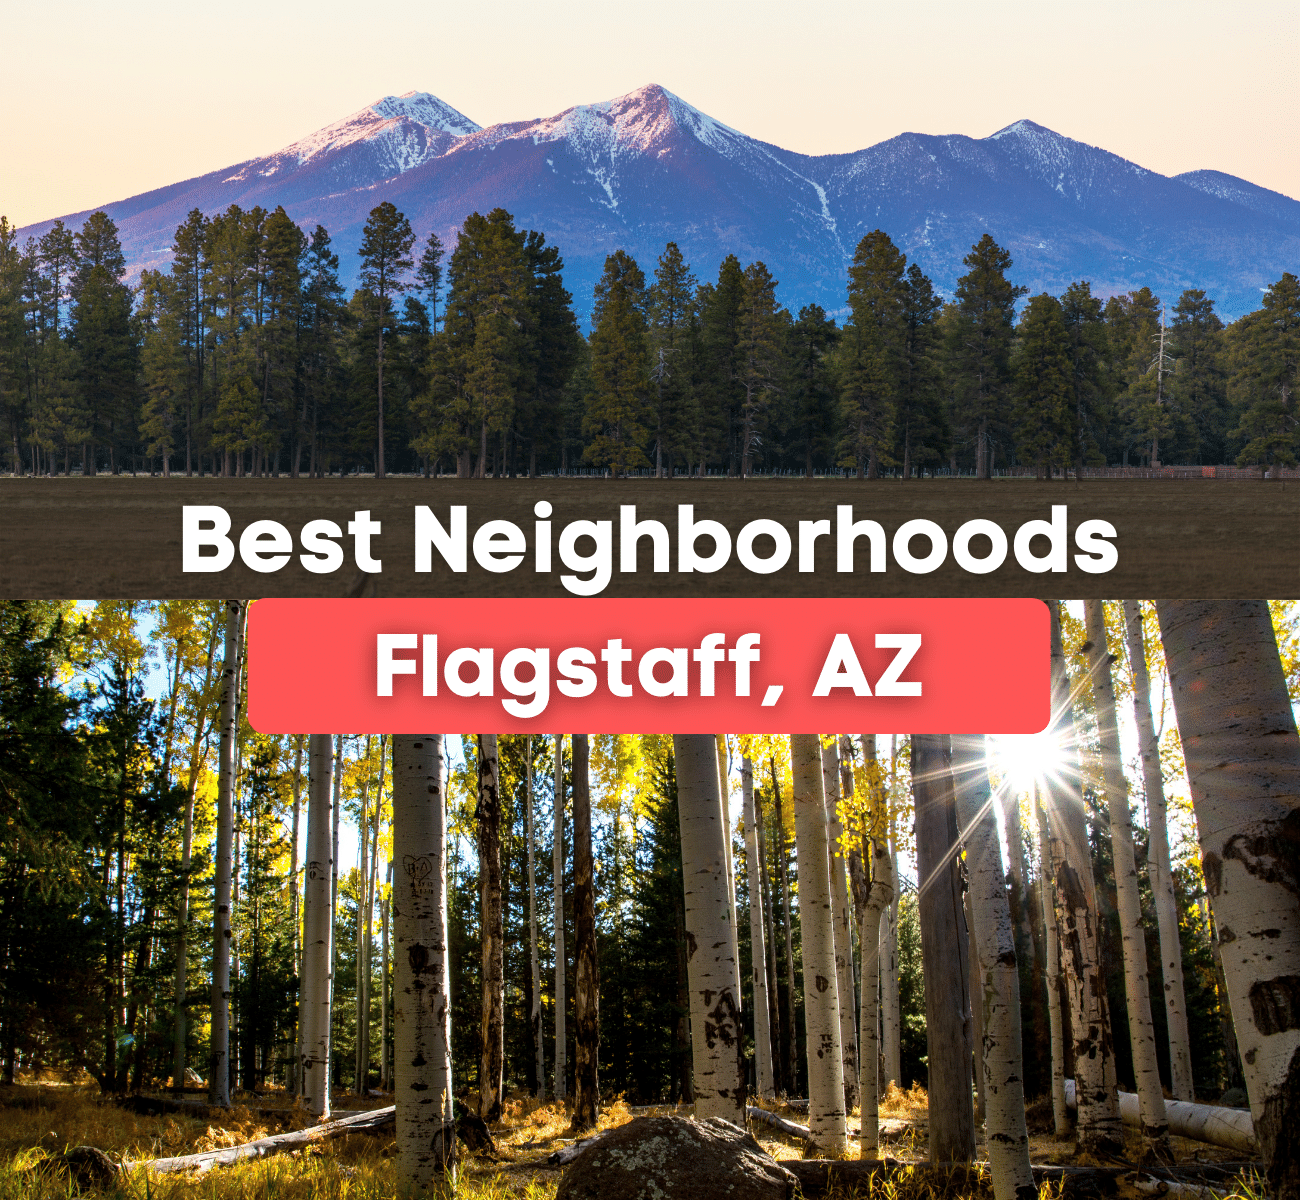 Best neighborhoods in Flagstaff, AZ - mountain and pine trees